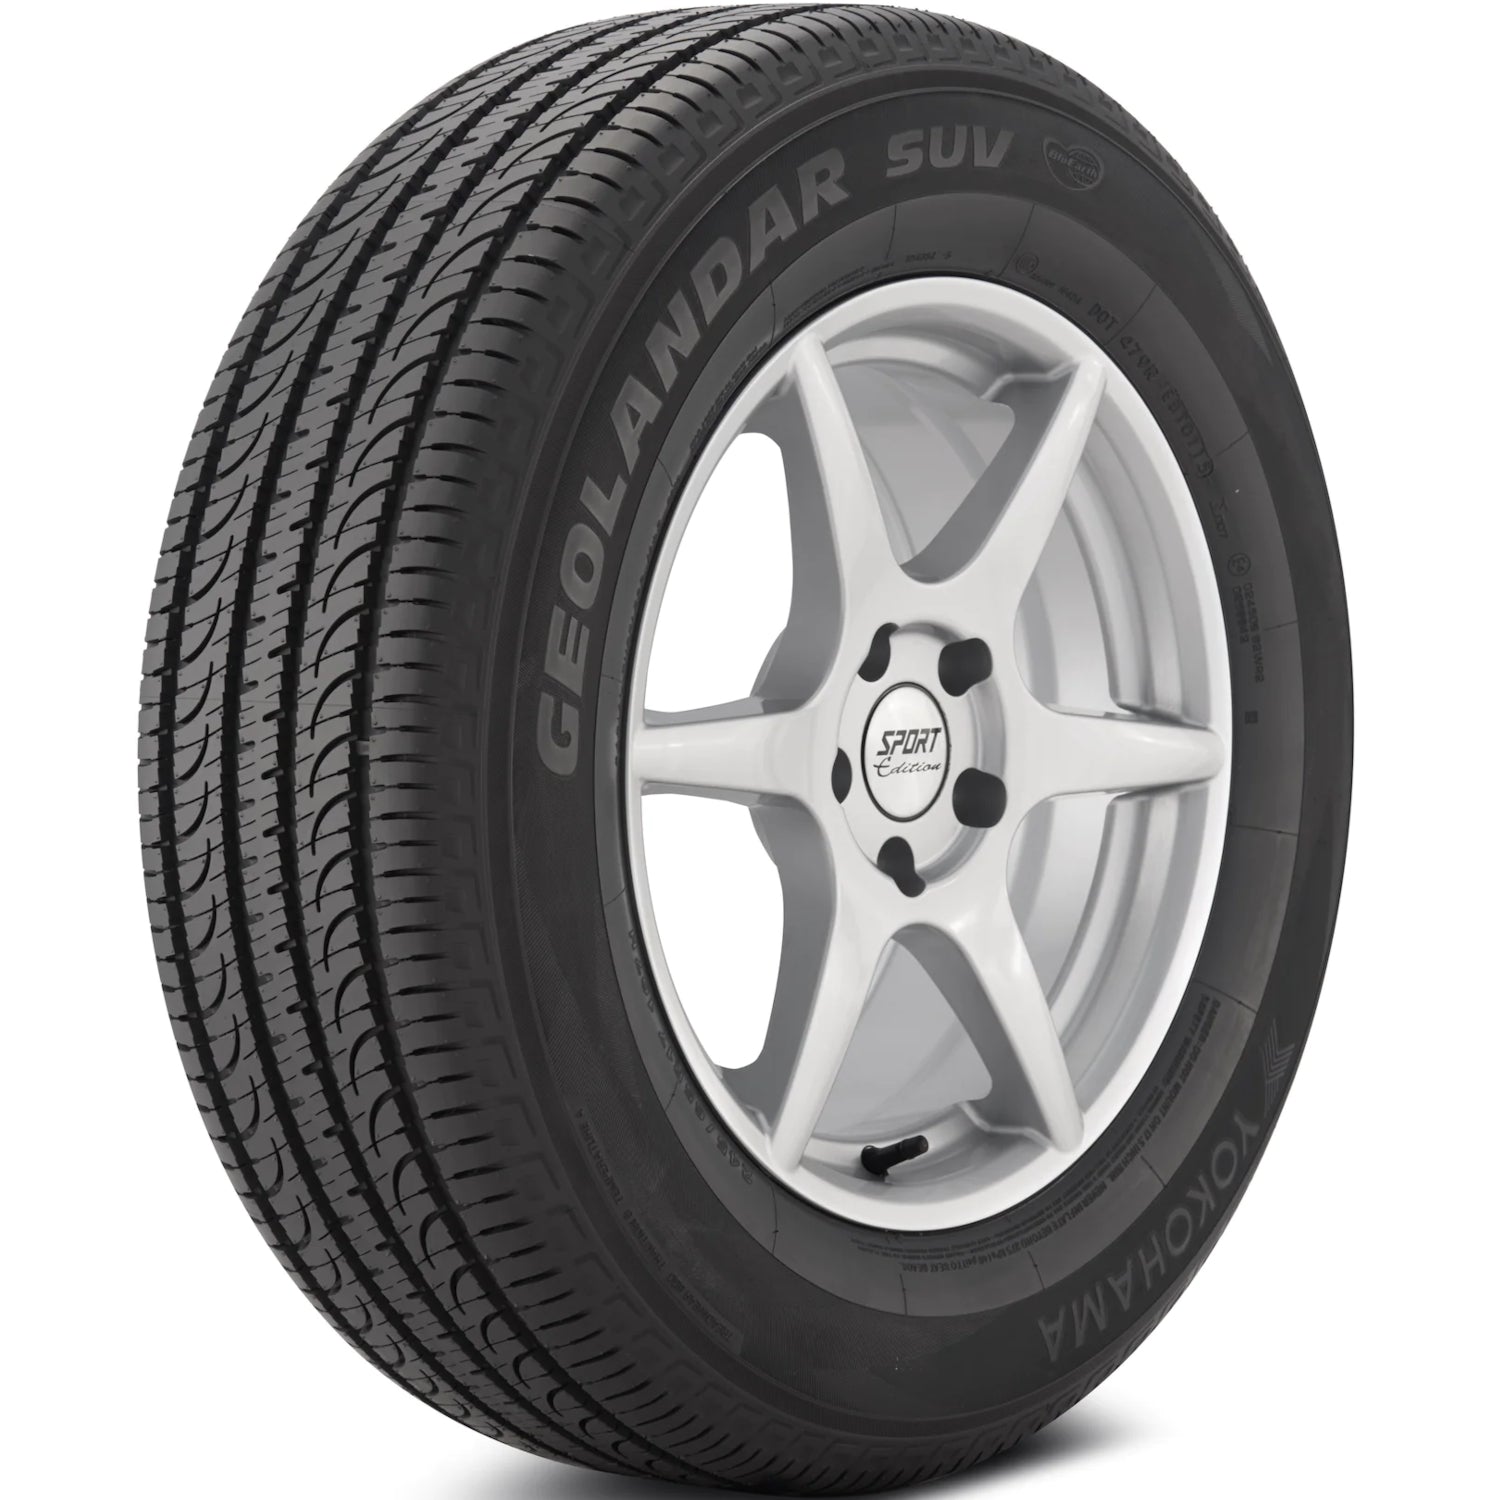 YOKOHAMA GEOLANDAR G055 225/55R19 (28.8X9.1R 19) Tires